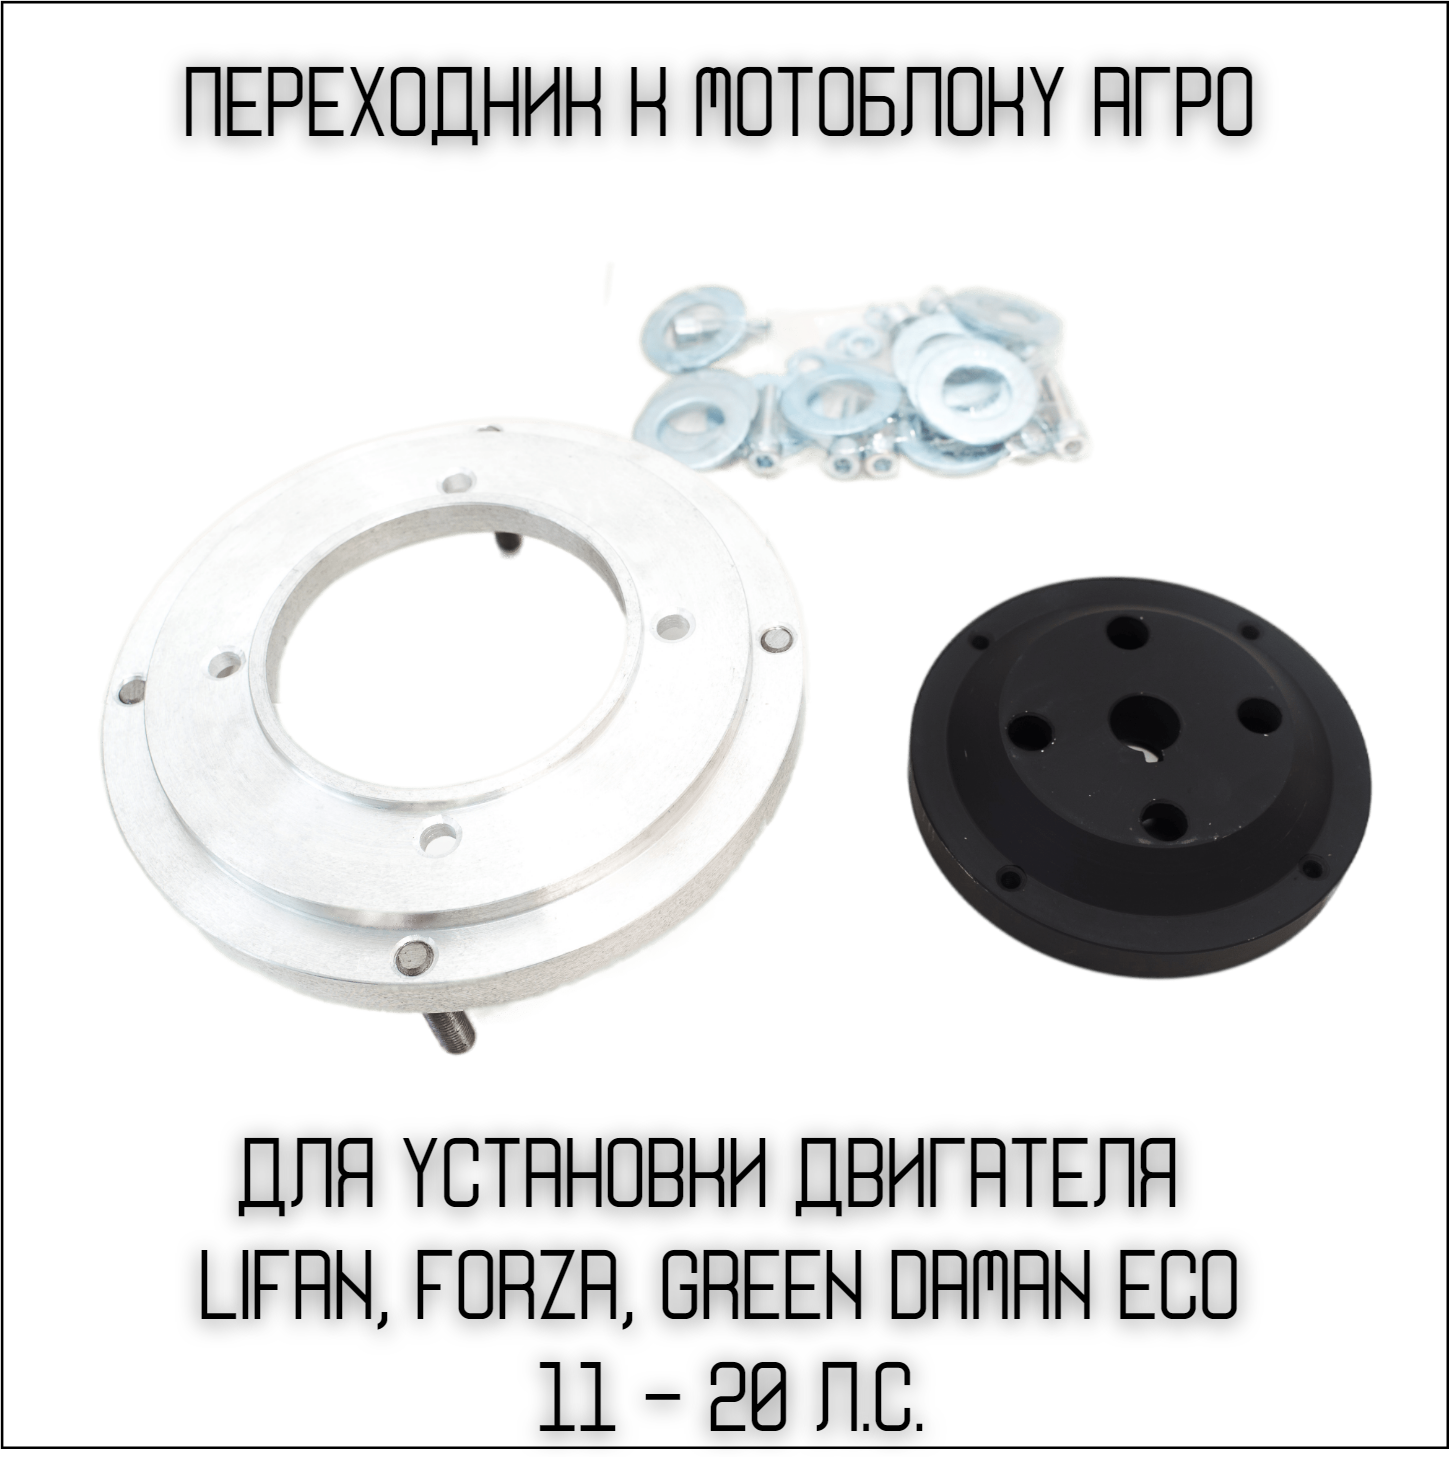 Переходник для установки двигателя Lifan Forza Green Daman Eco (11-20 Л. С) на мотоблок Агро адаптер/Подарок мужу